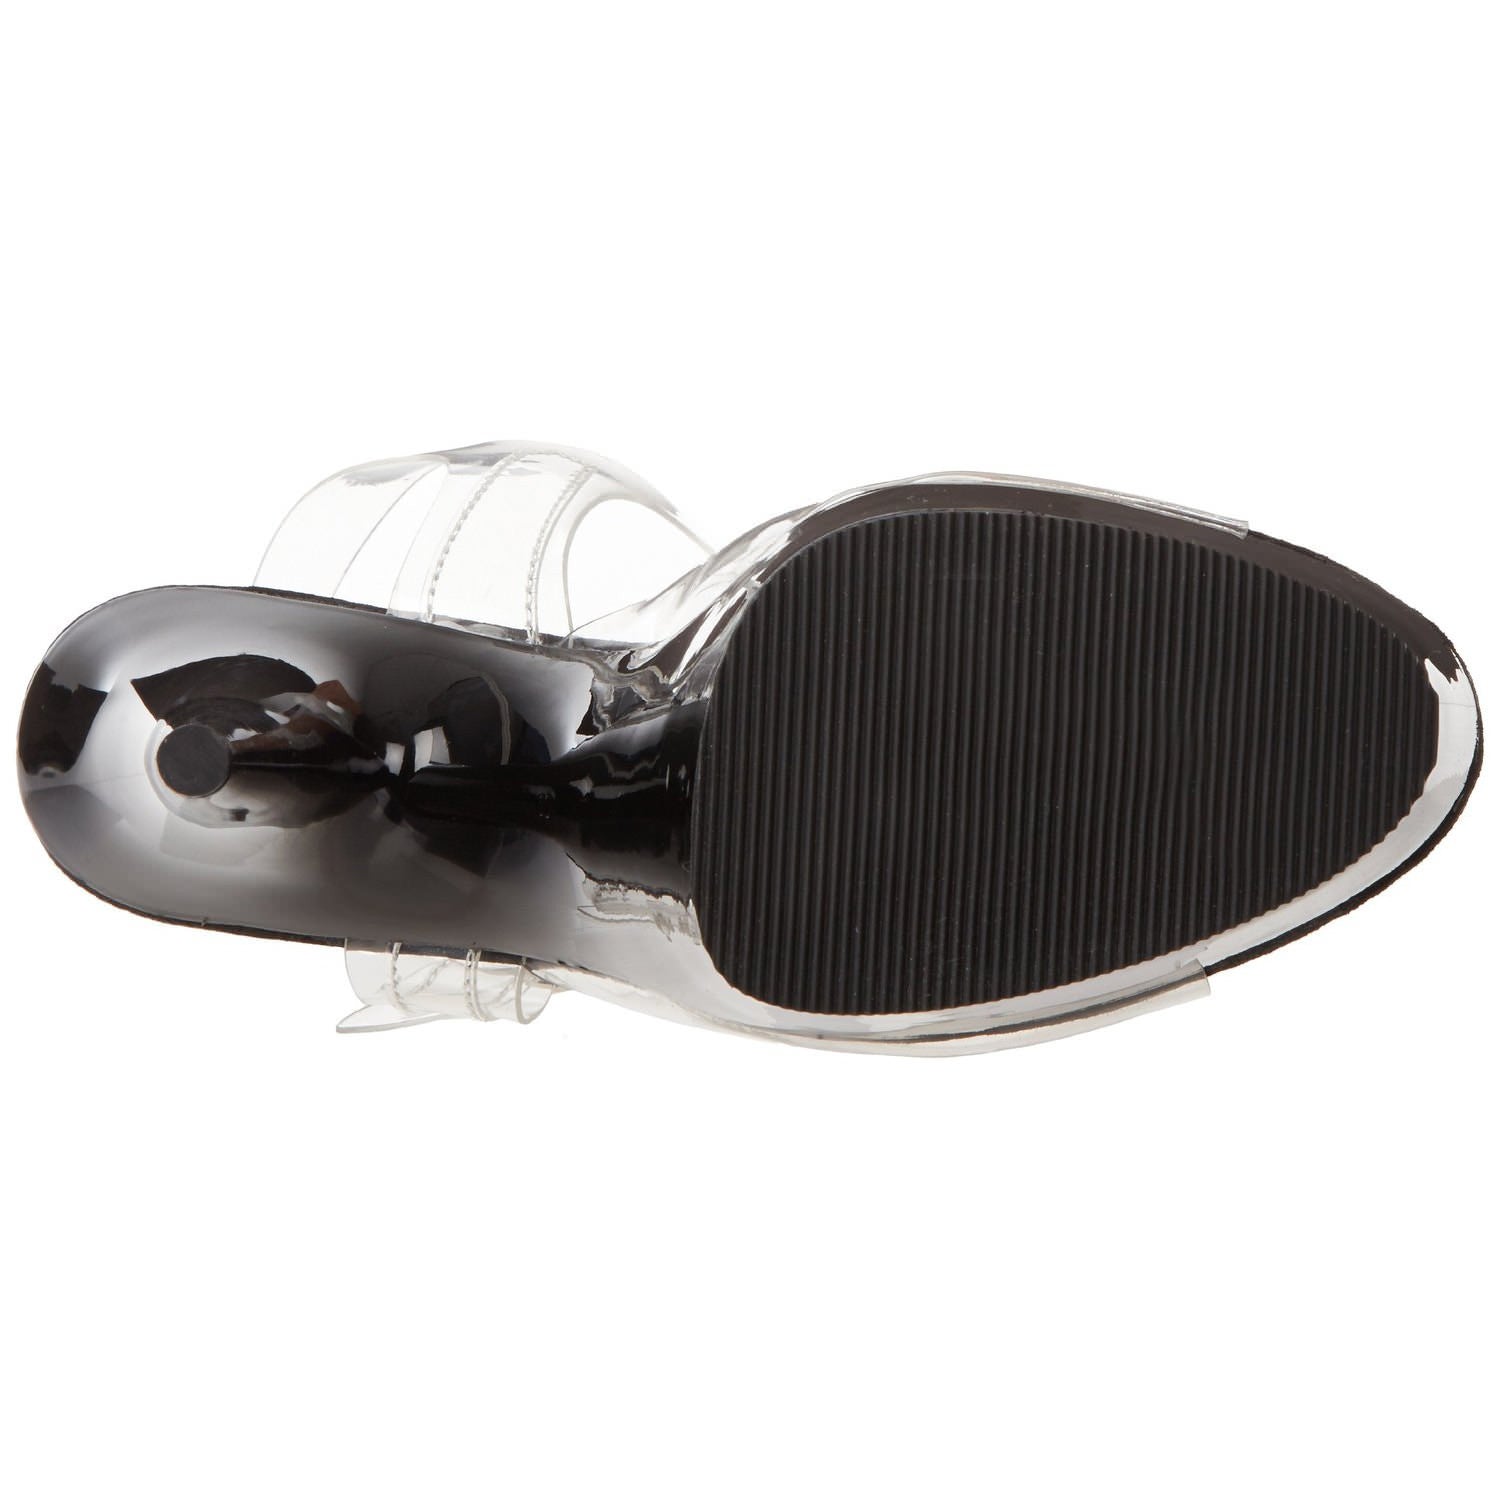 PLEASER DELIGHT-608 Clear-Black Ankle Strap Sandals - Shoecup.com - 7